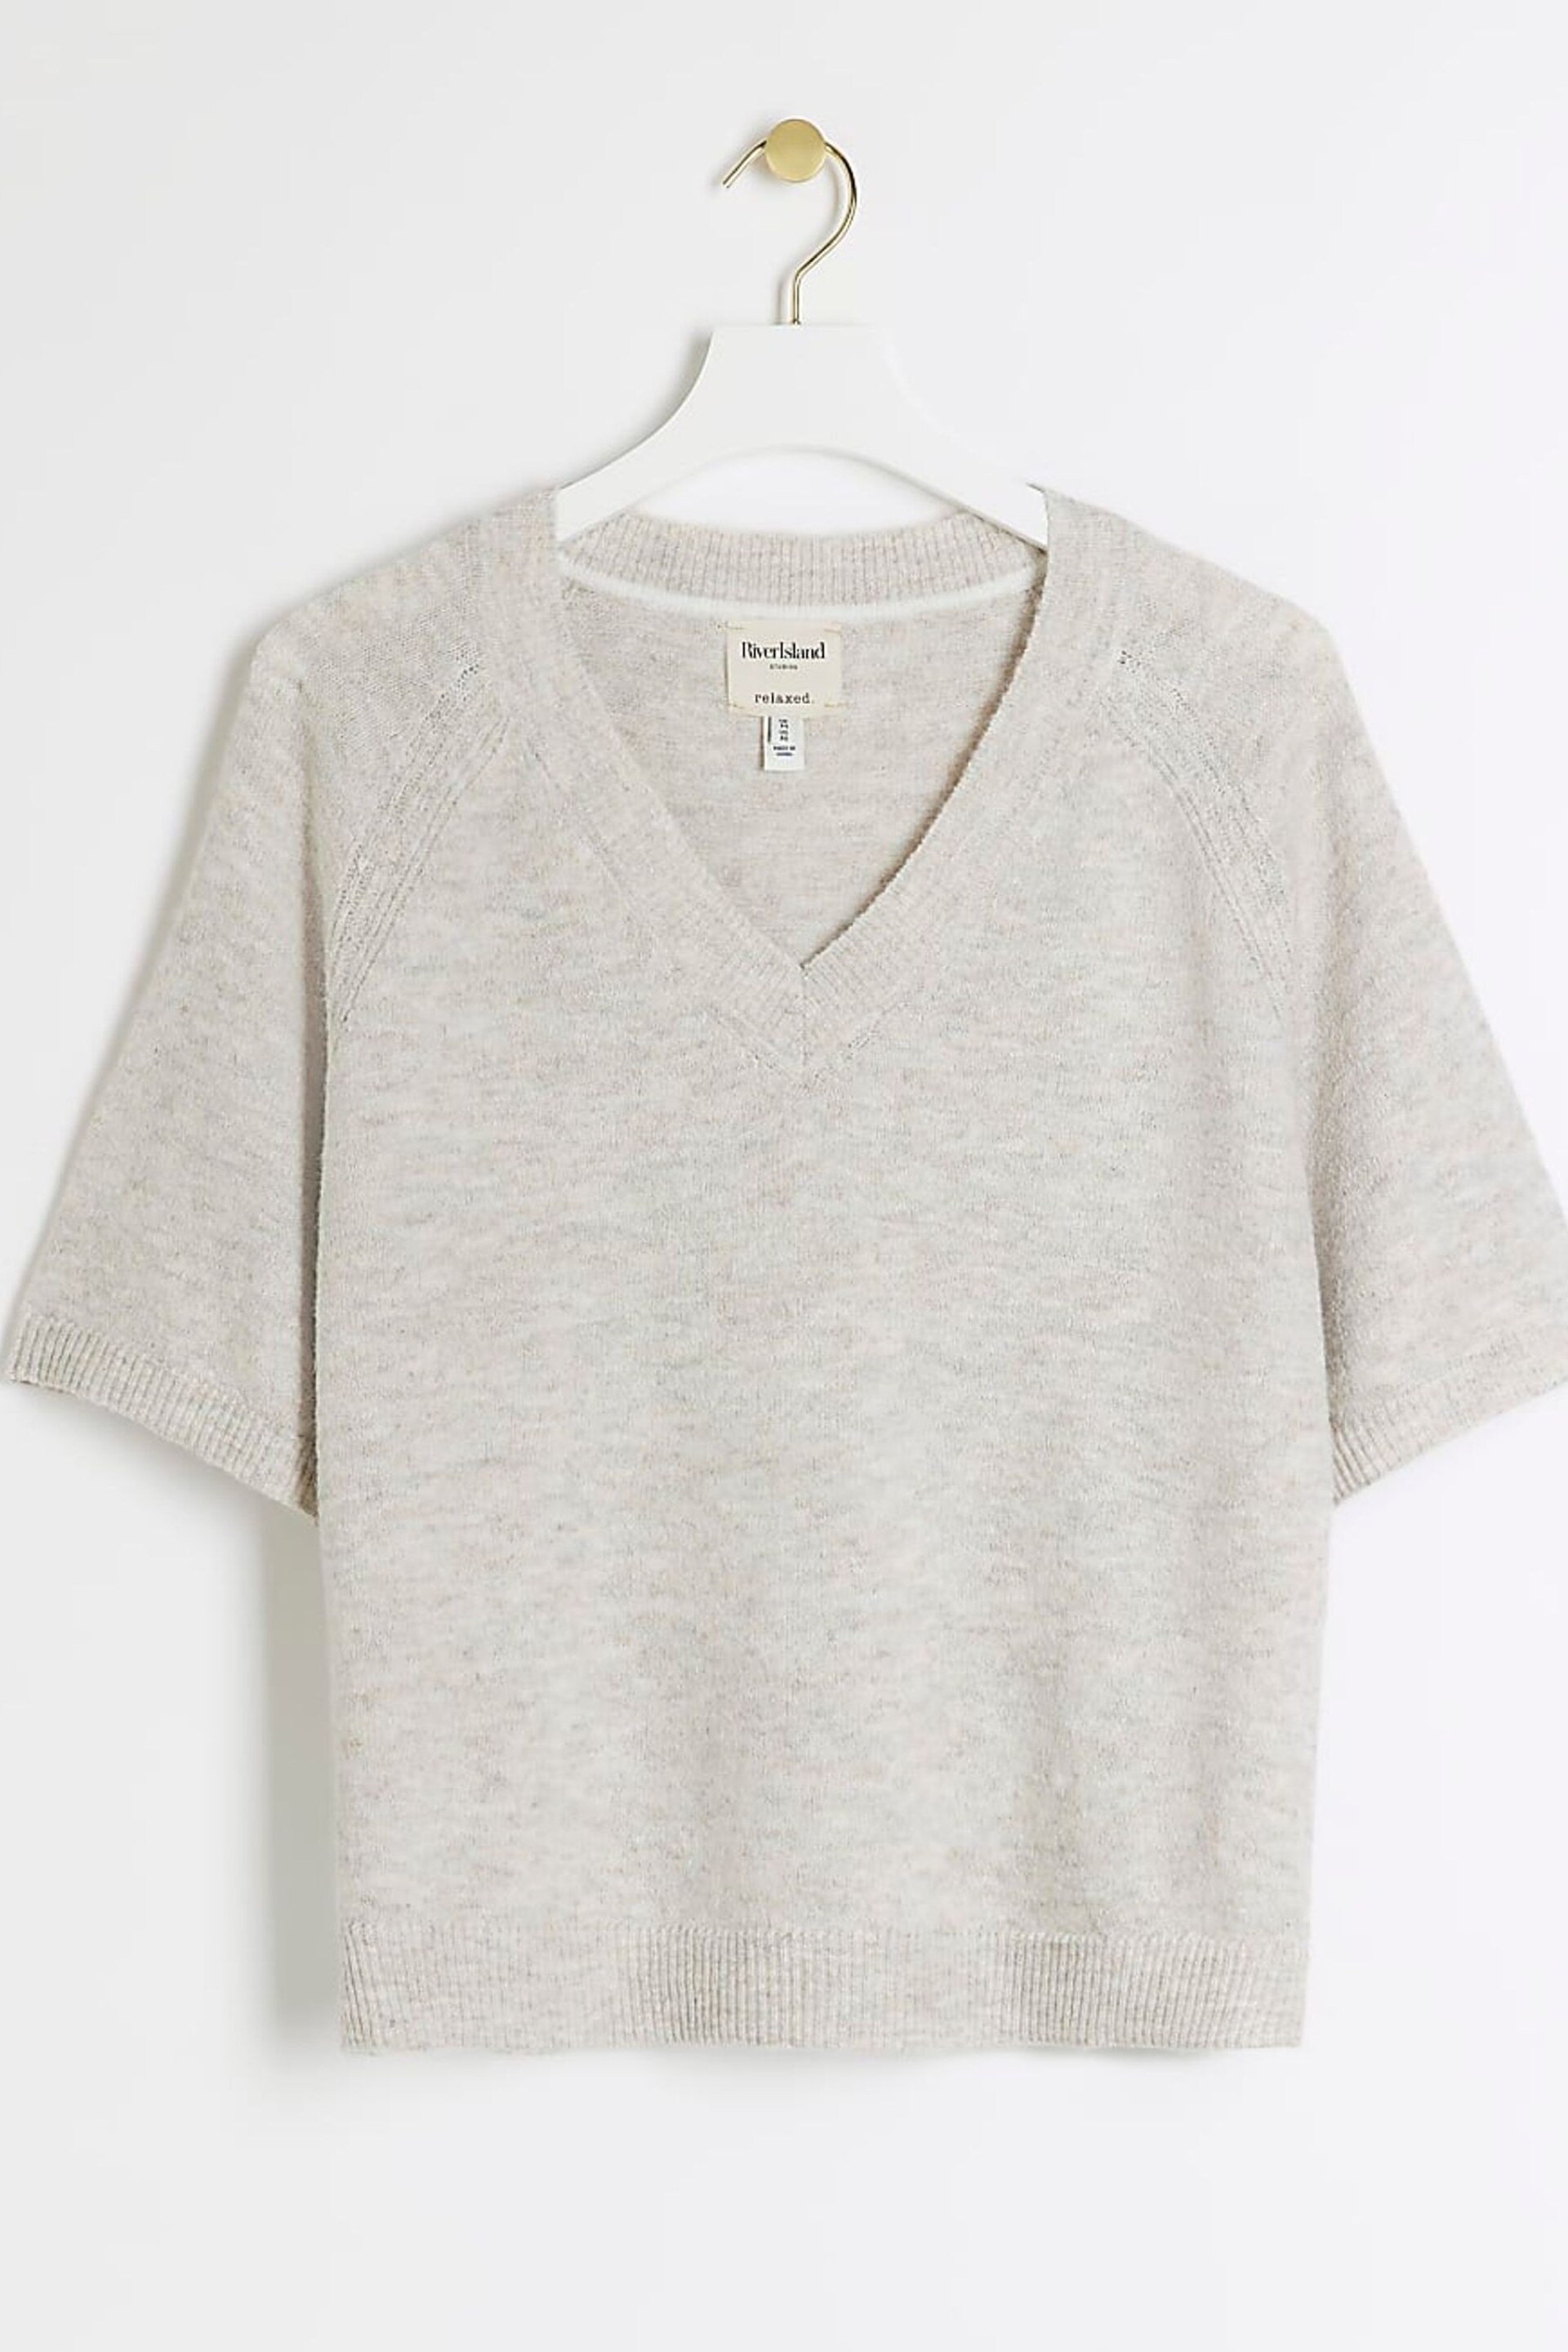 River Island Cream Lightweight Knit T-Shirt - Image 5 of 6